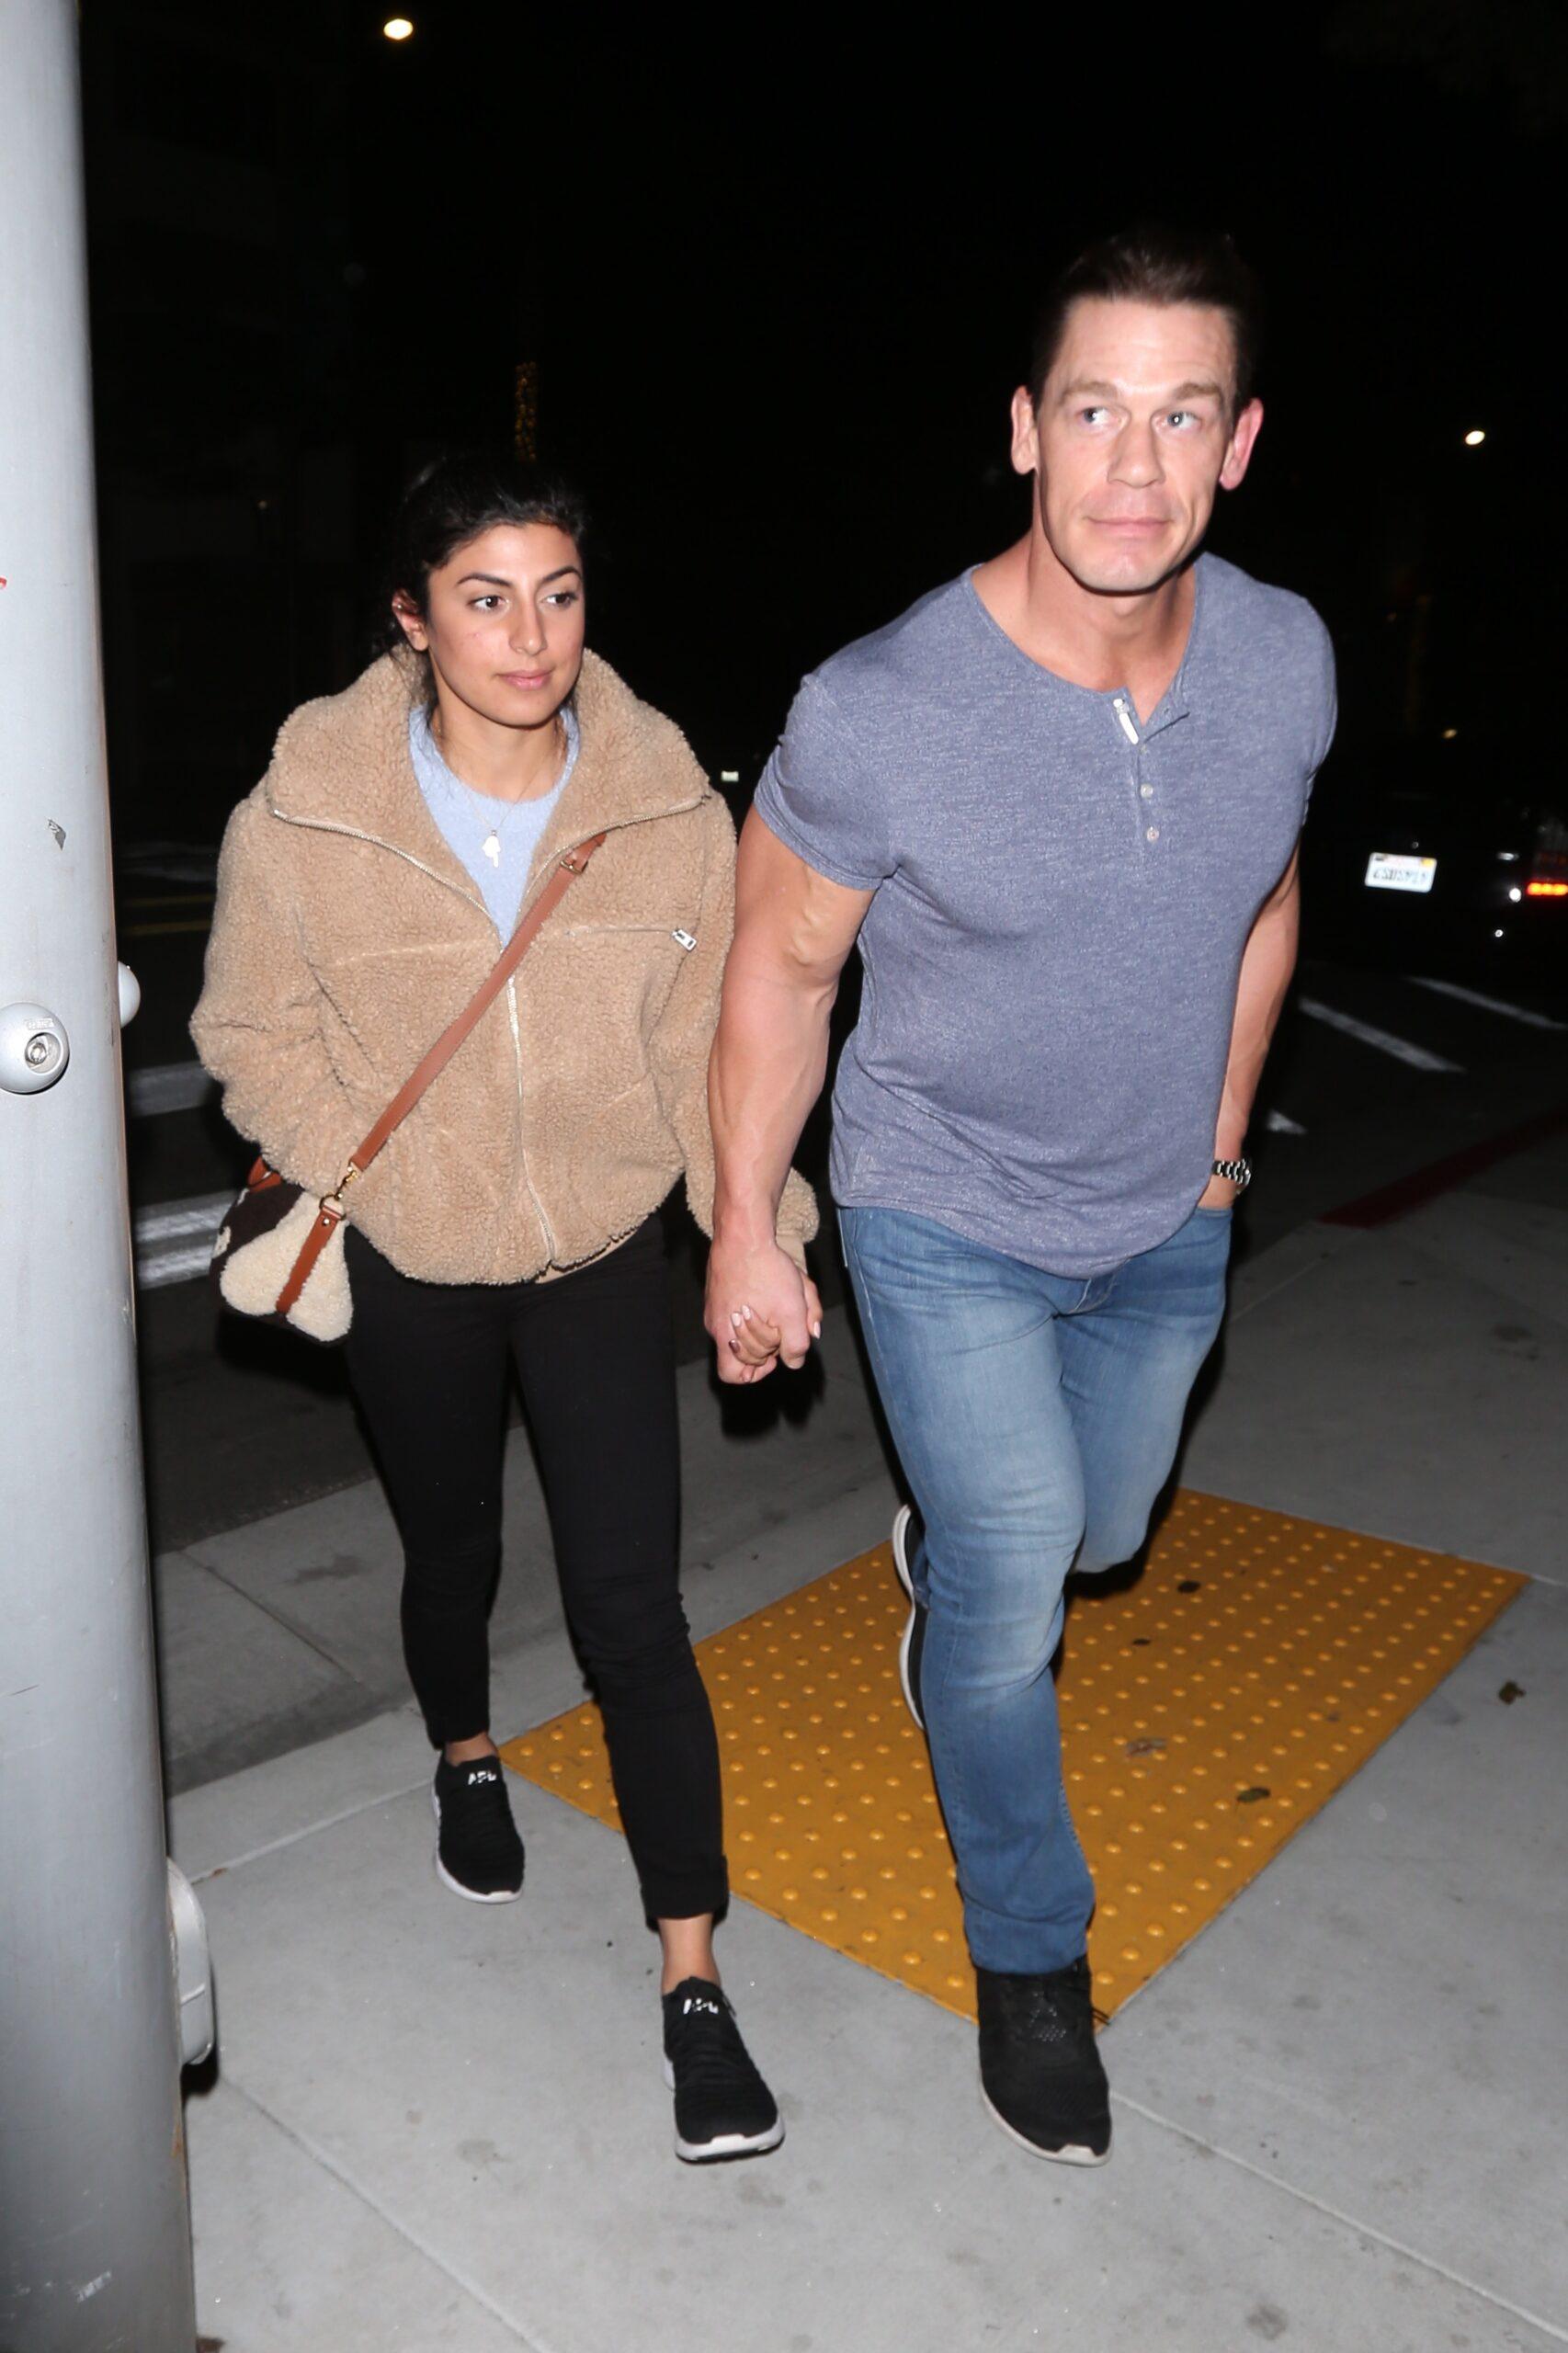 John Cena and girlfriend Shay Shariatzadeh walk hand in hand as they grab dinner at Spago restaurant